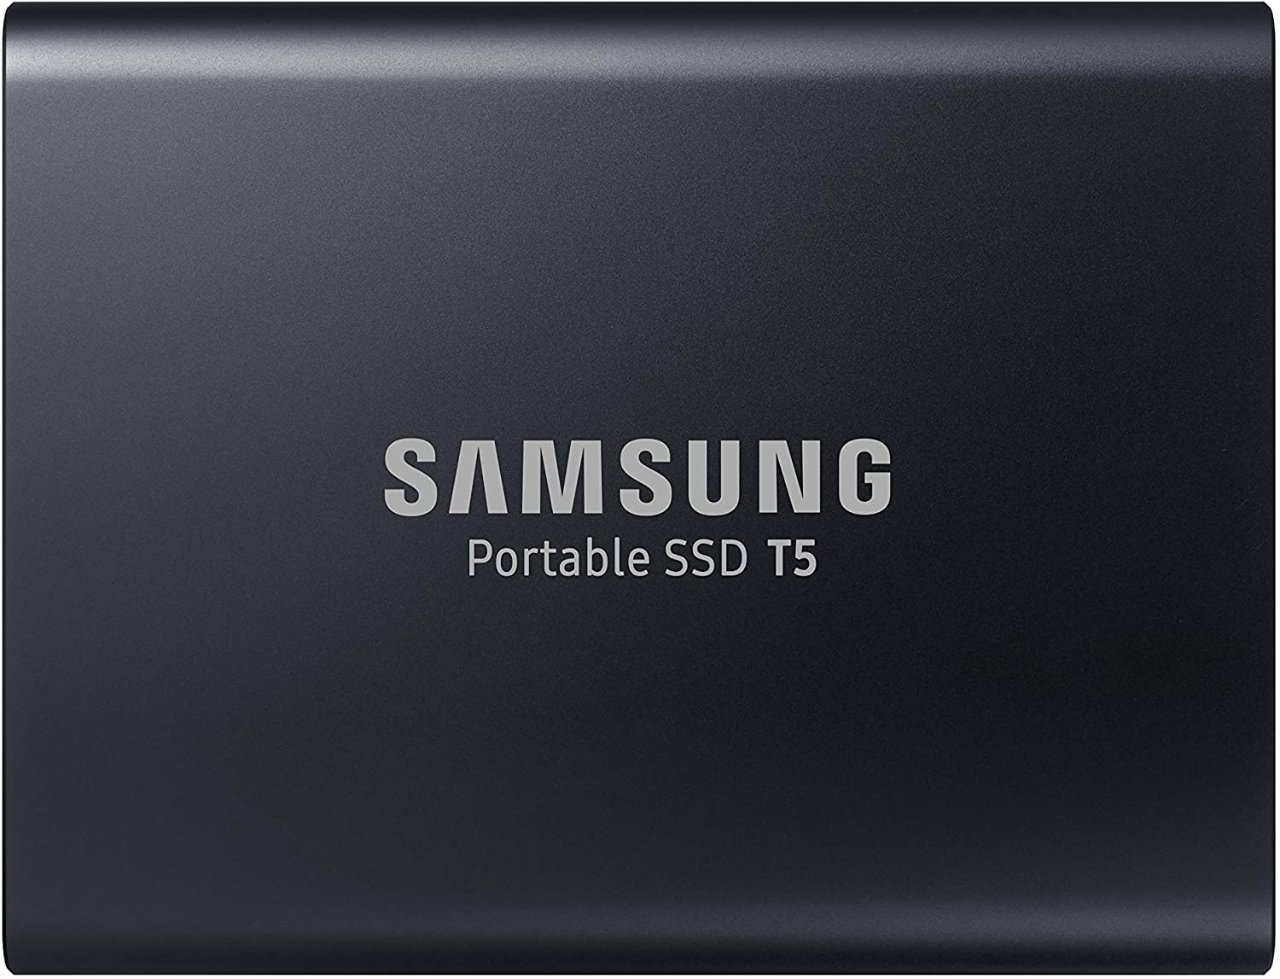 Find deals on Samsung Portable SSDs